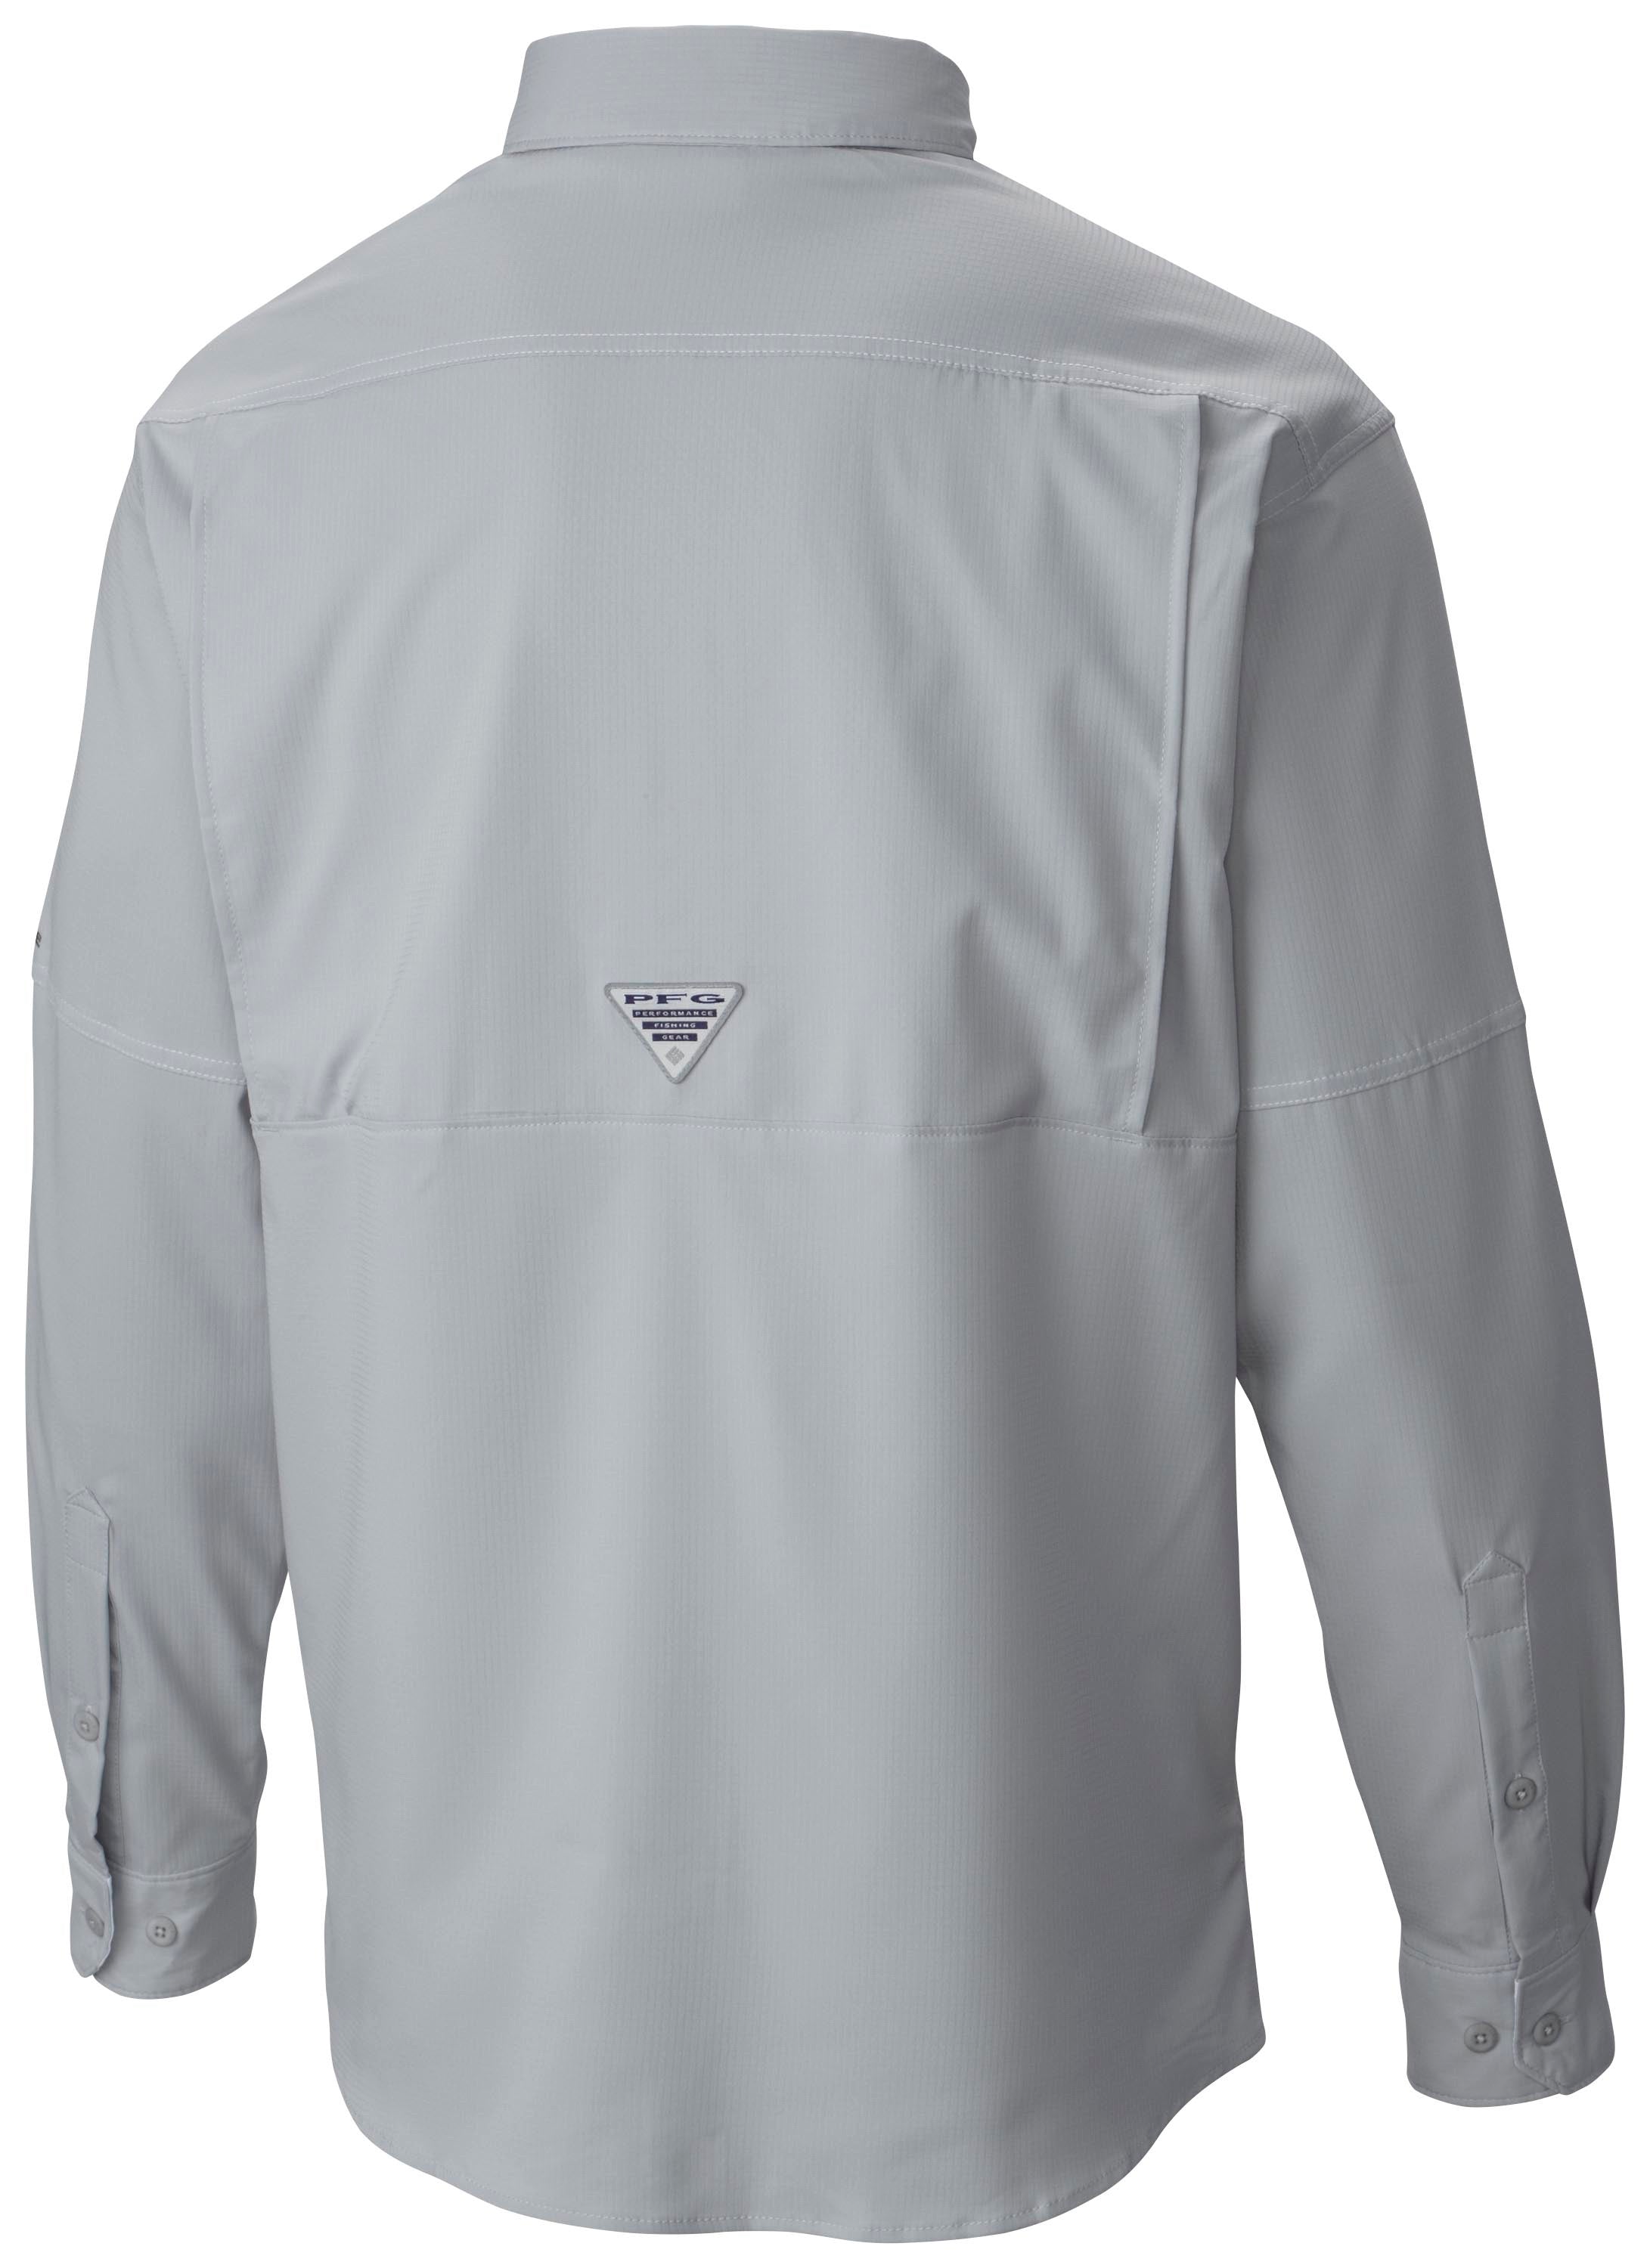 Miami Hurricanes Columbia Tamiami Low Drag L/S Shirt- Cool Grey